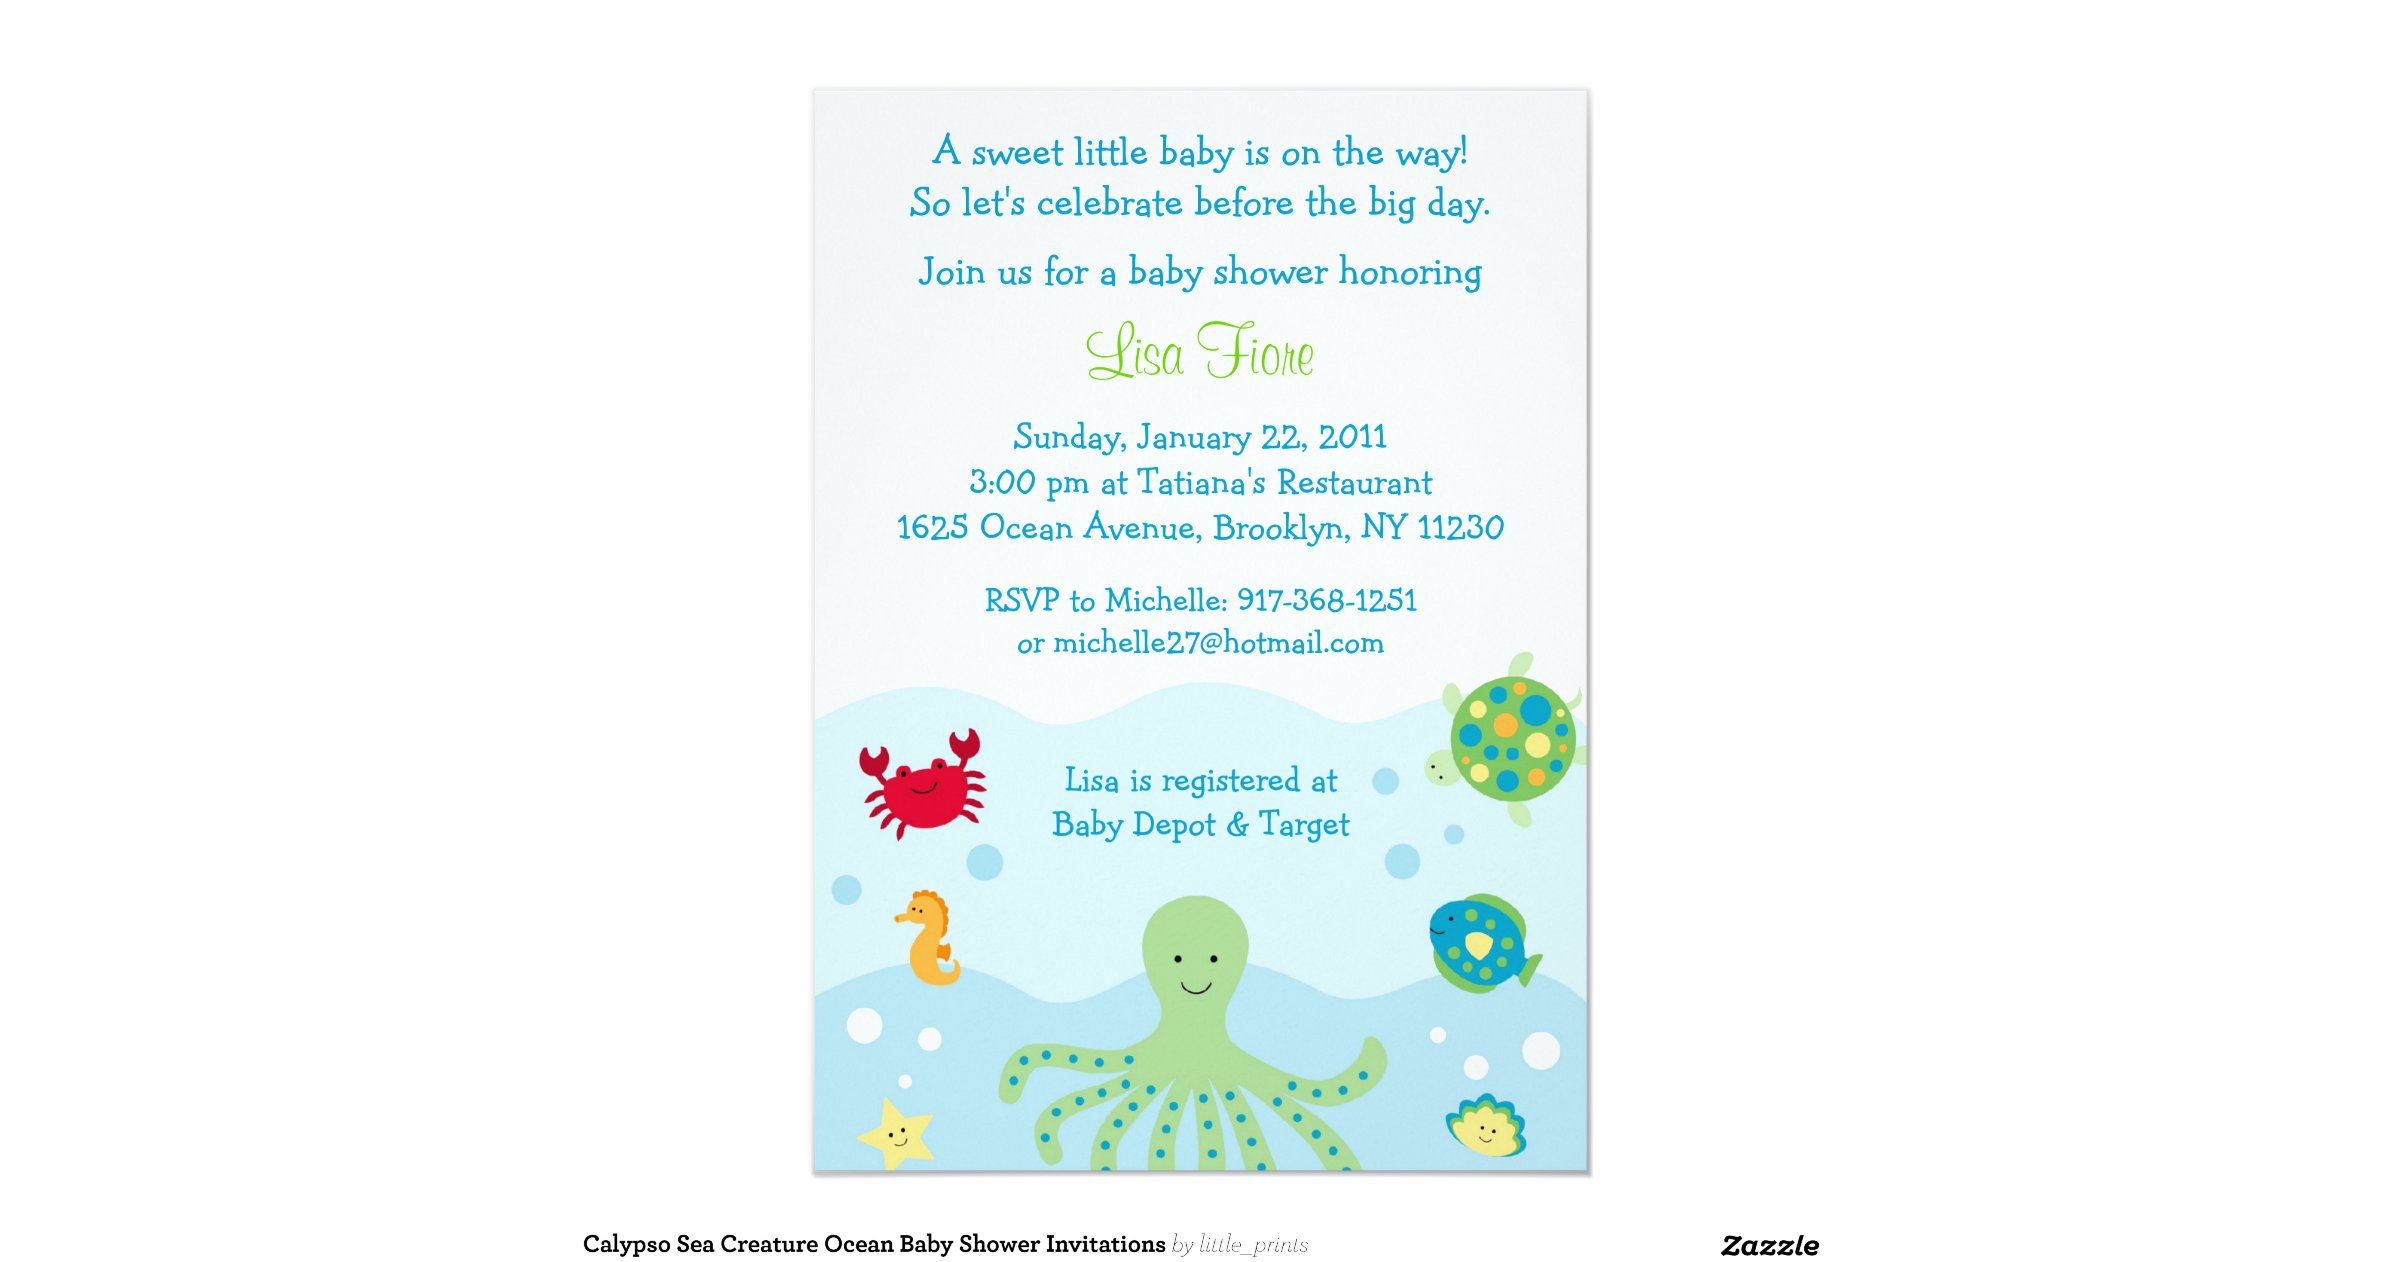 calypso-sea-creature-ocean-baby-shower-invitations-5-x-7-invitation